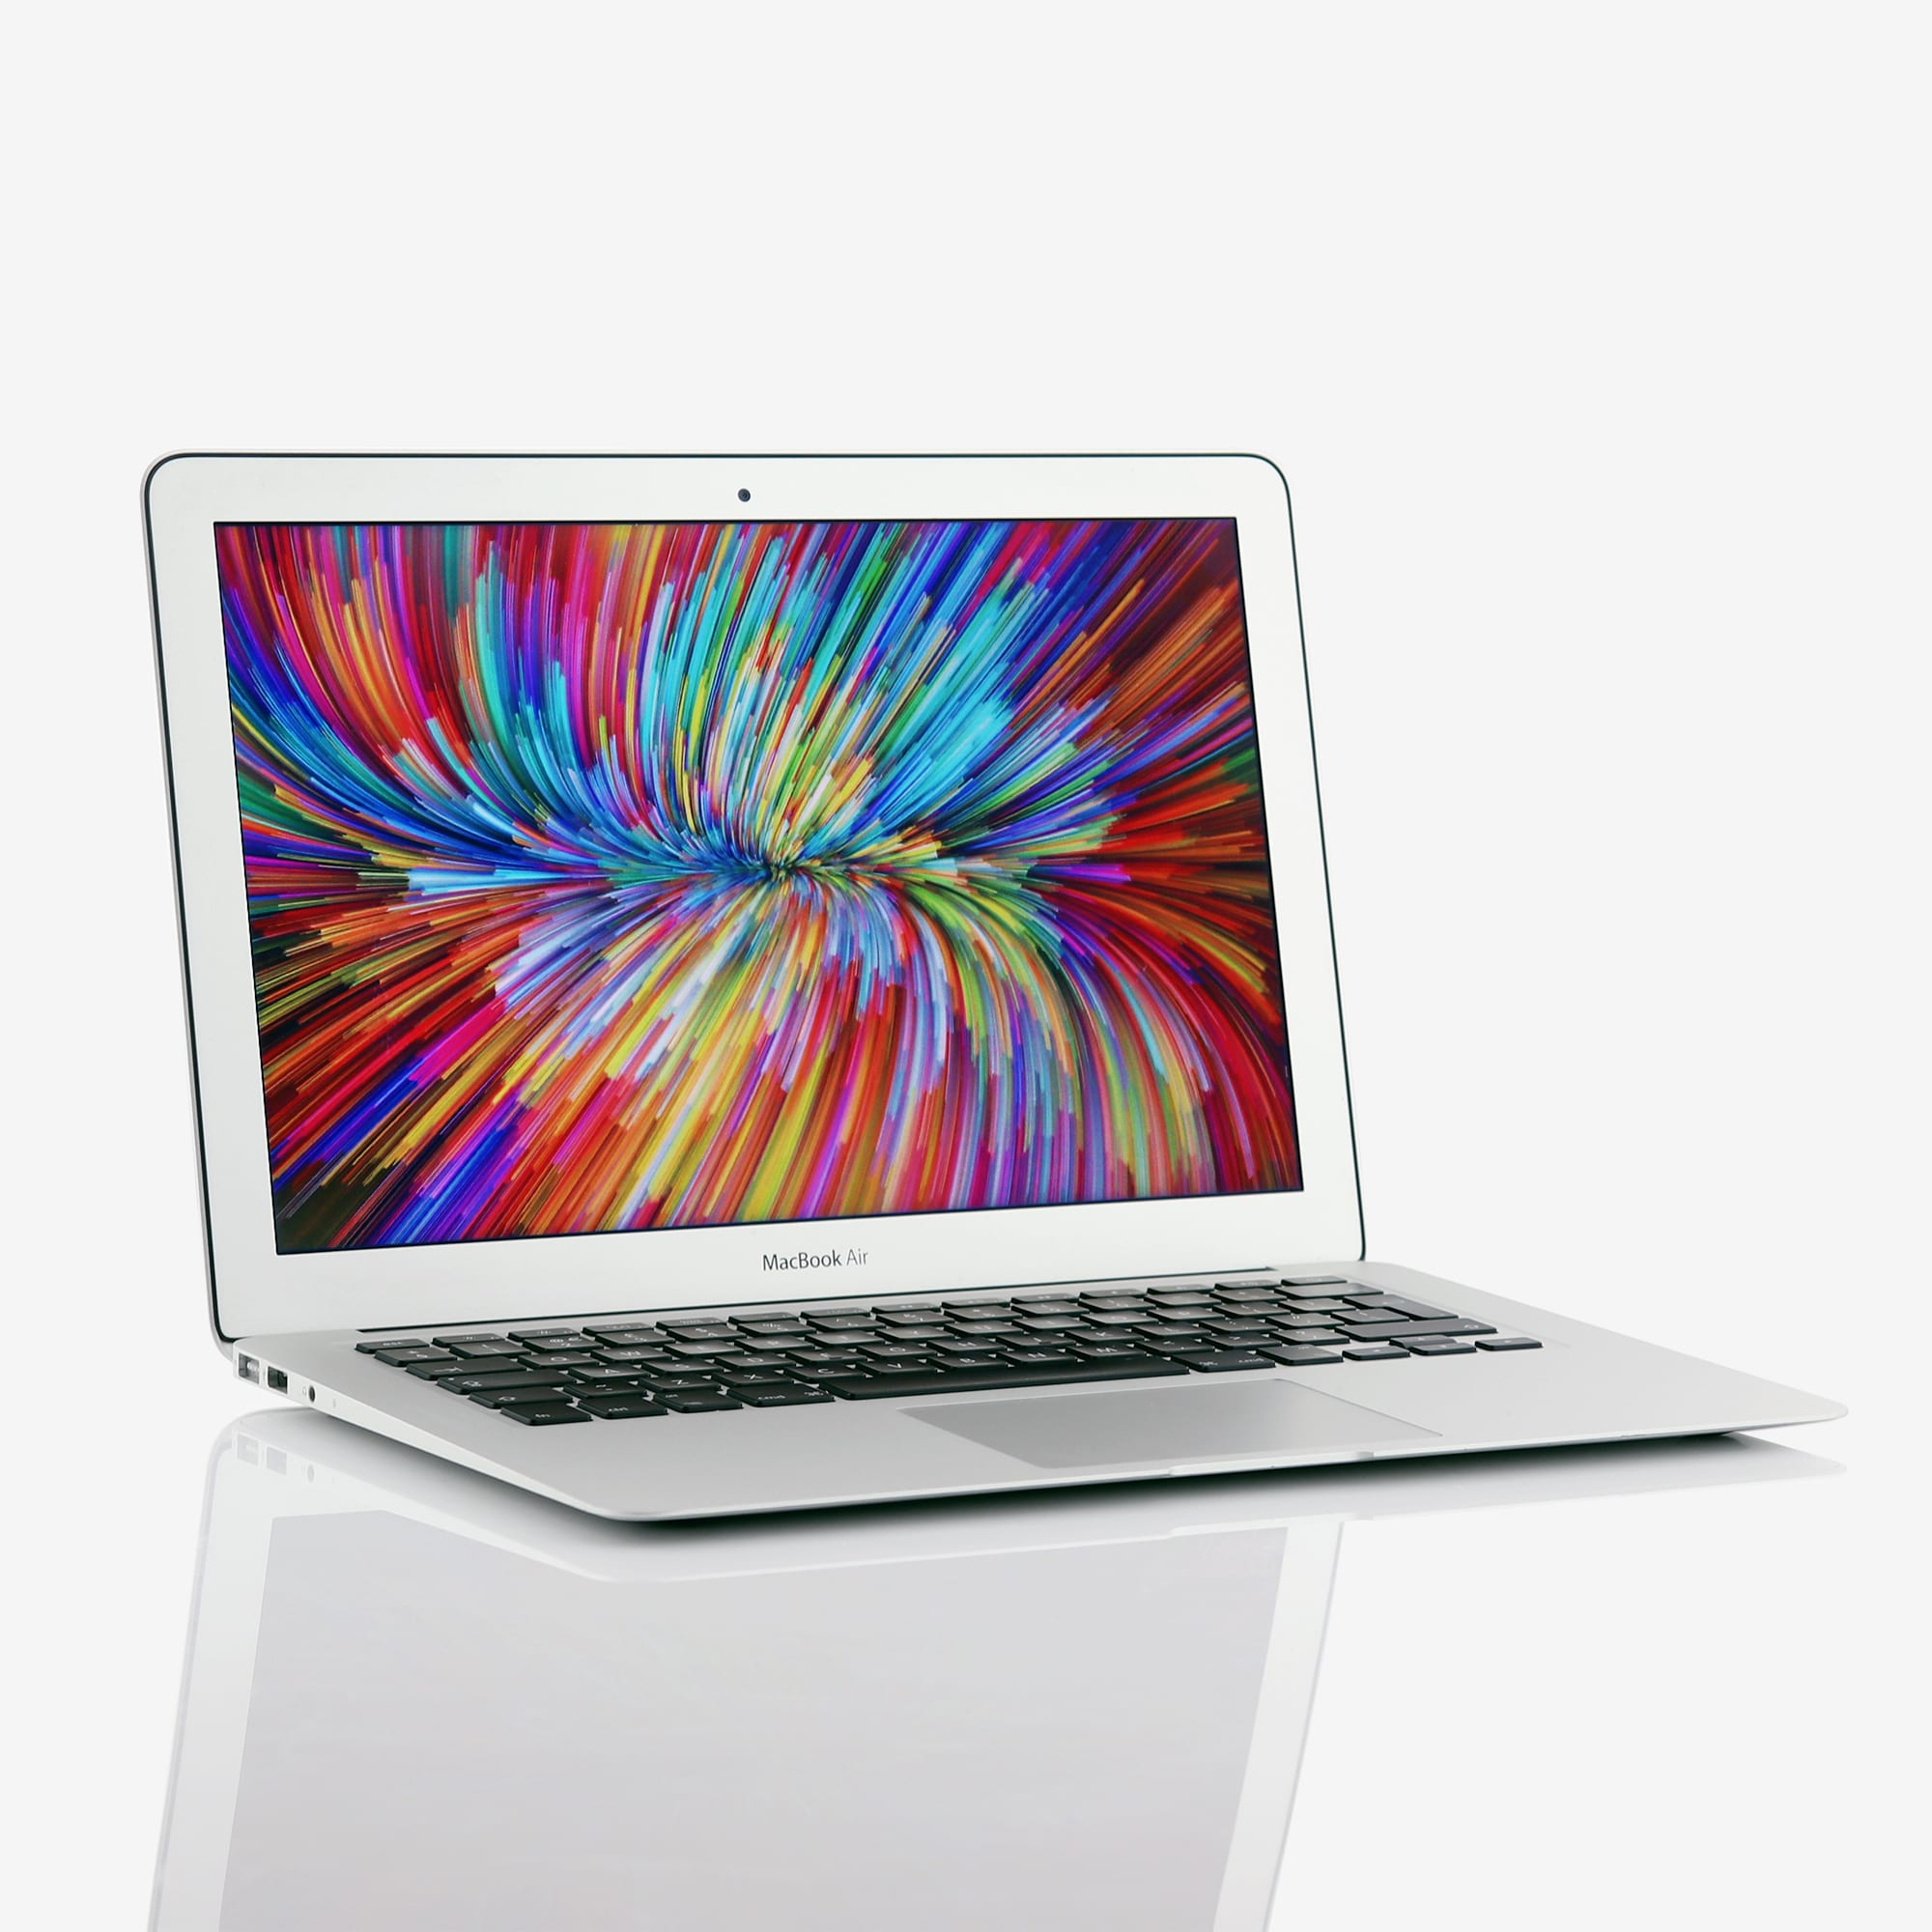 1 x Apple MacBook Air 13 Inch Intel Core i5 1.40 GHz (2014)